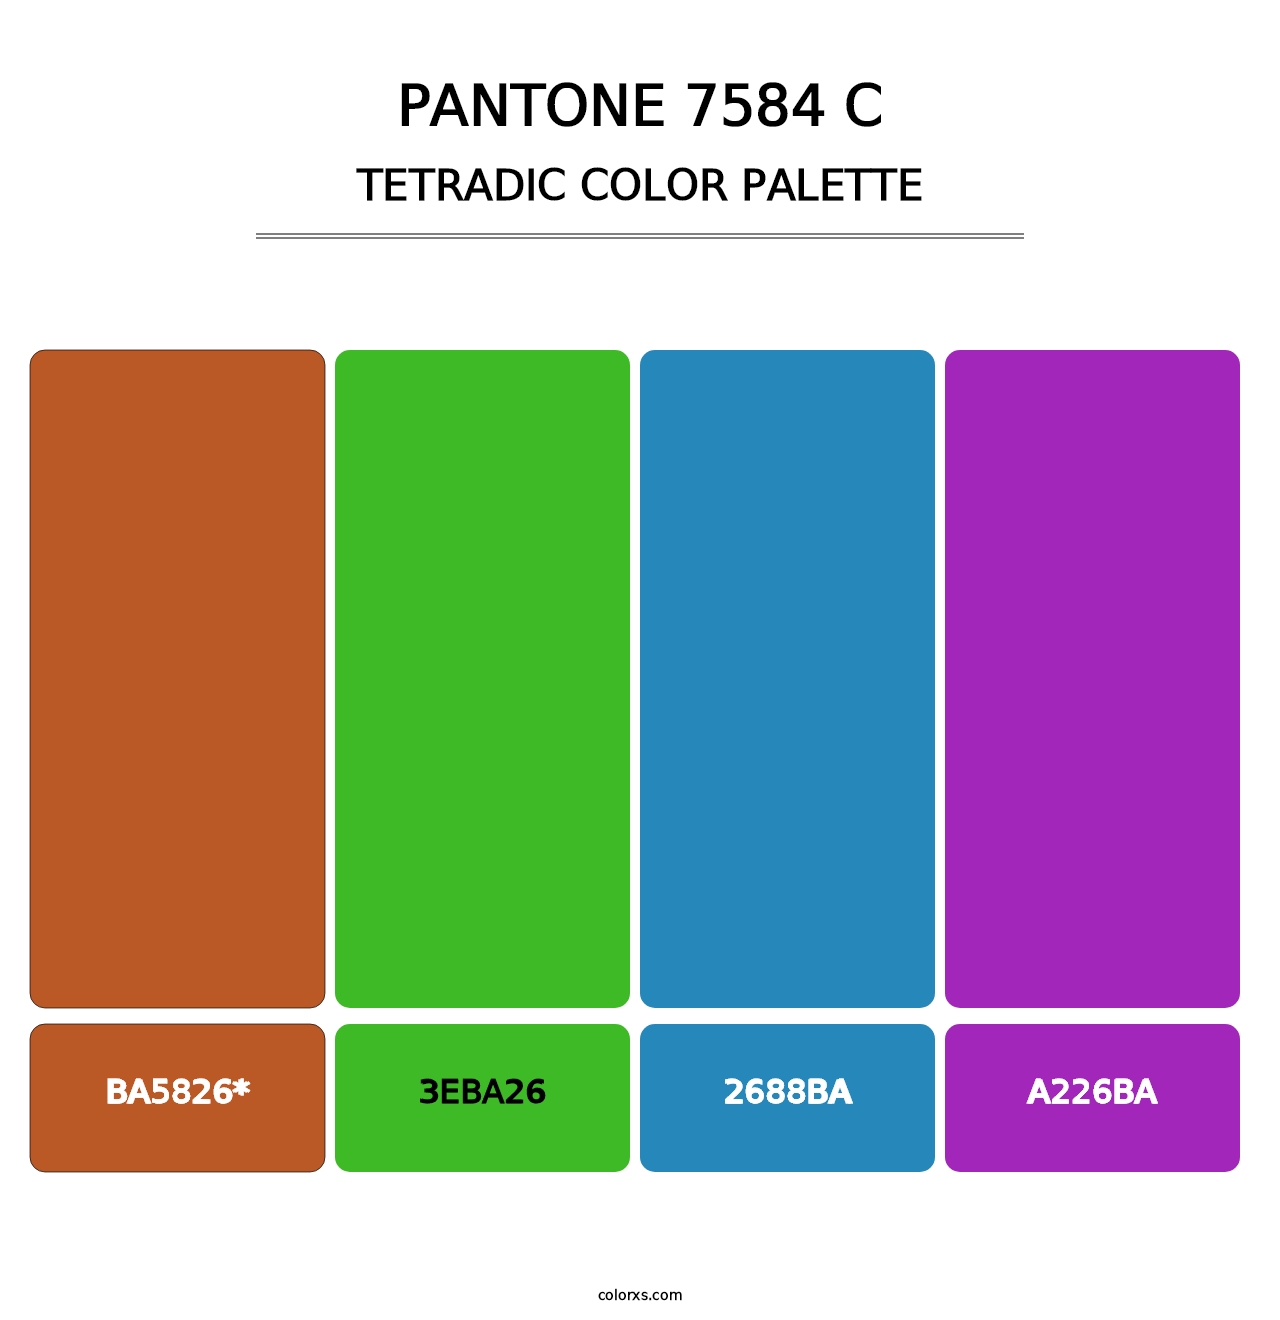 PANTONE 7584 C - Tetradic Color Palette